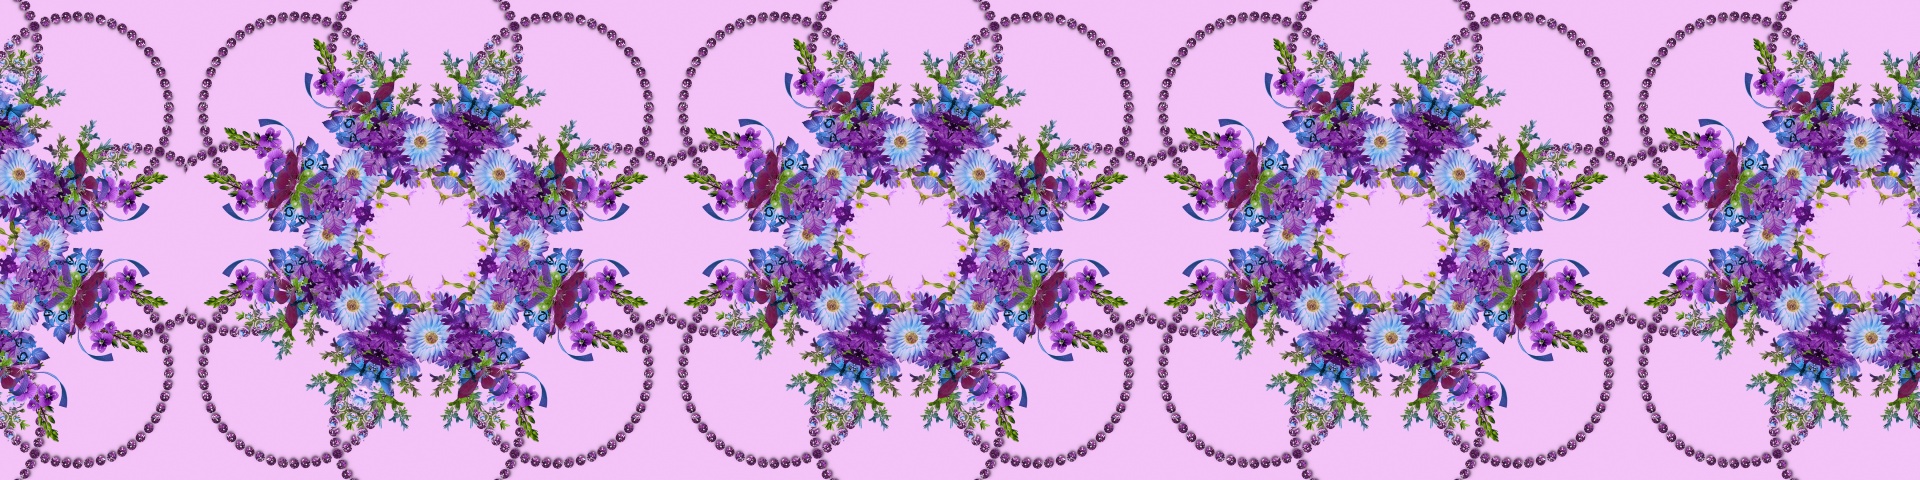 floral-border-header-purple.jpg